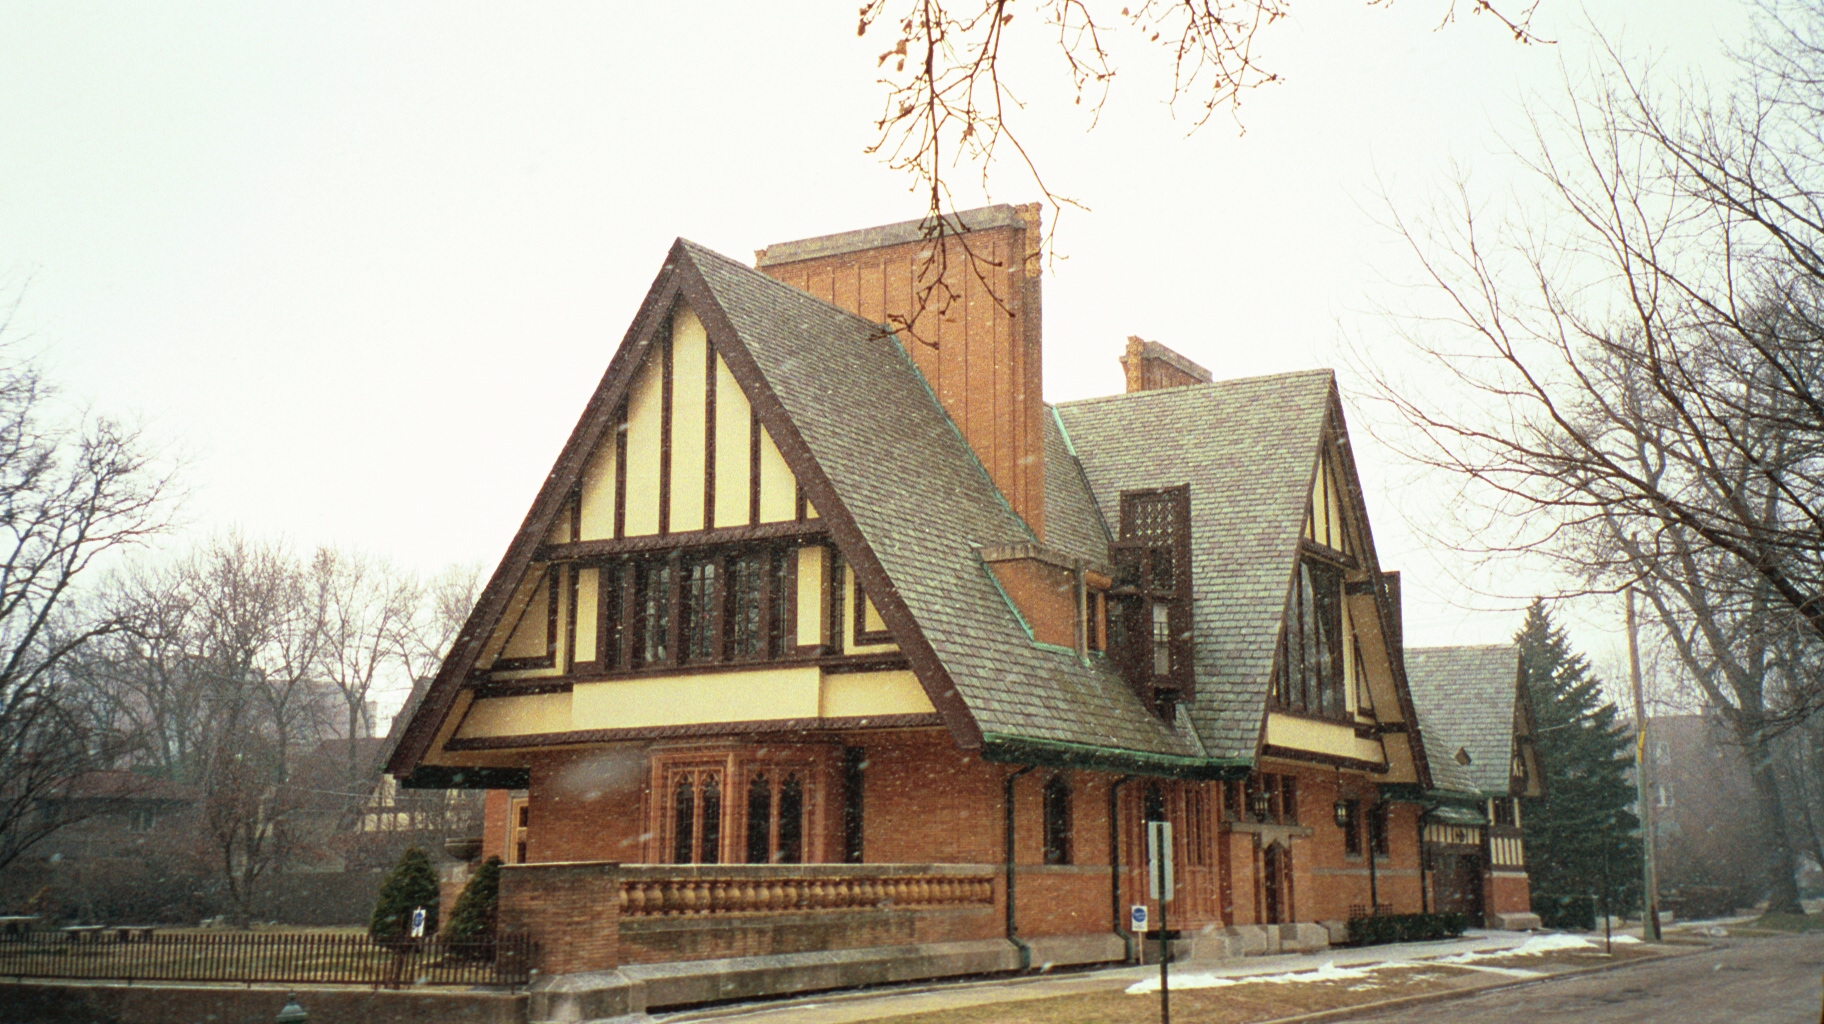 House in Oak Park, Illinois